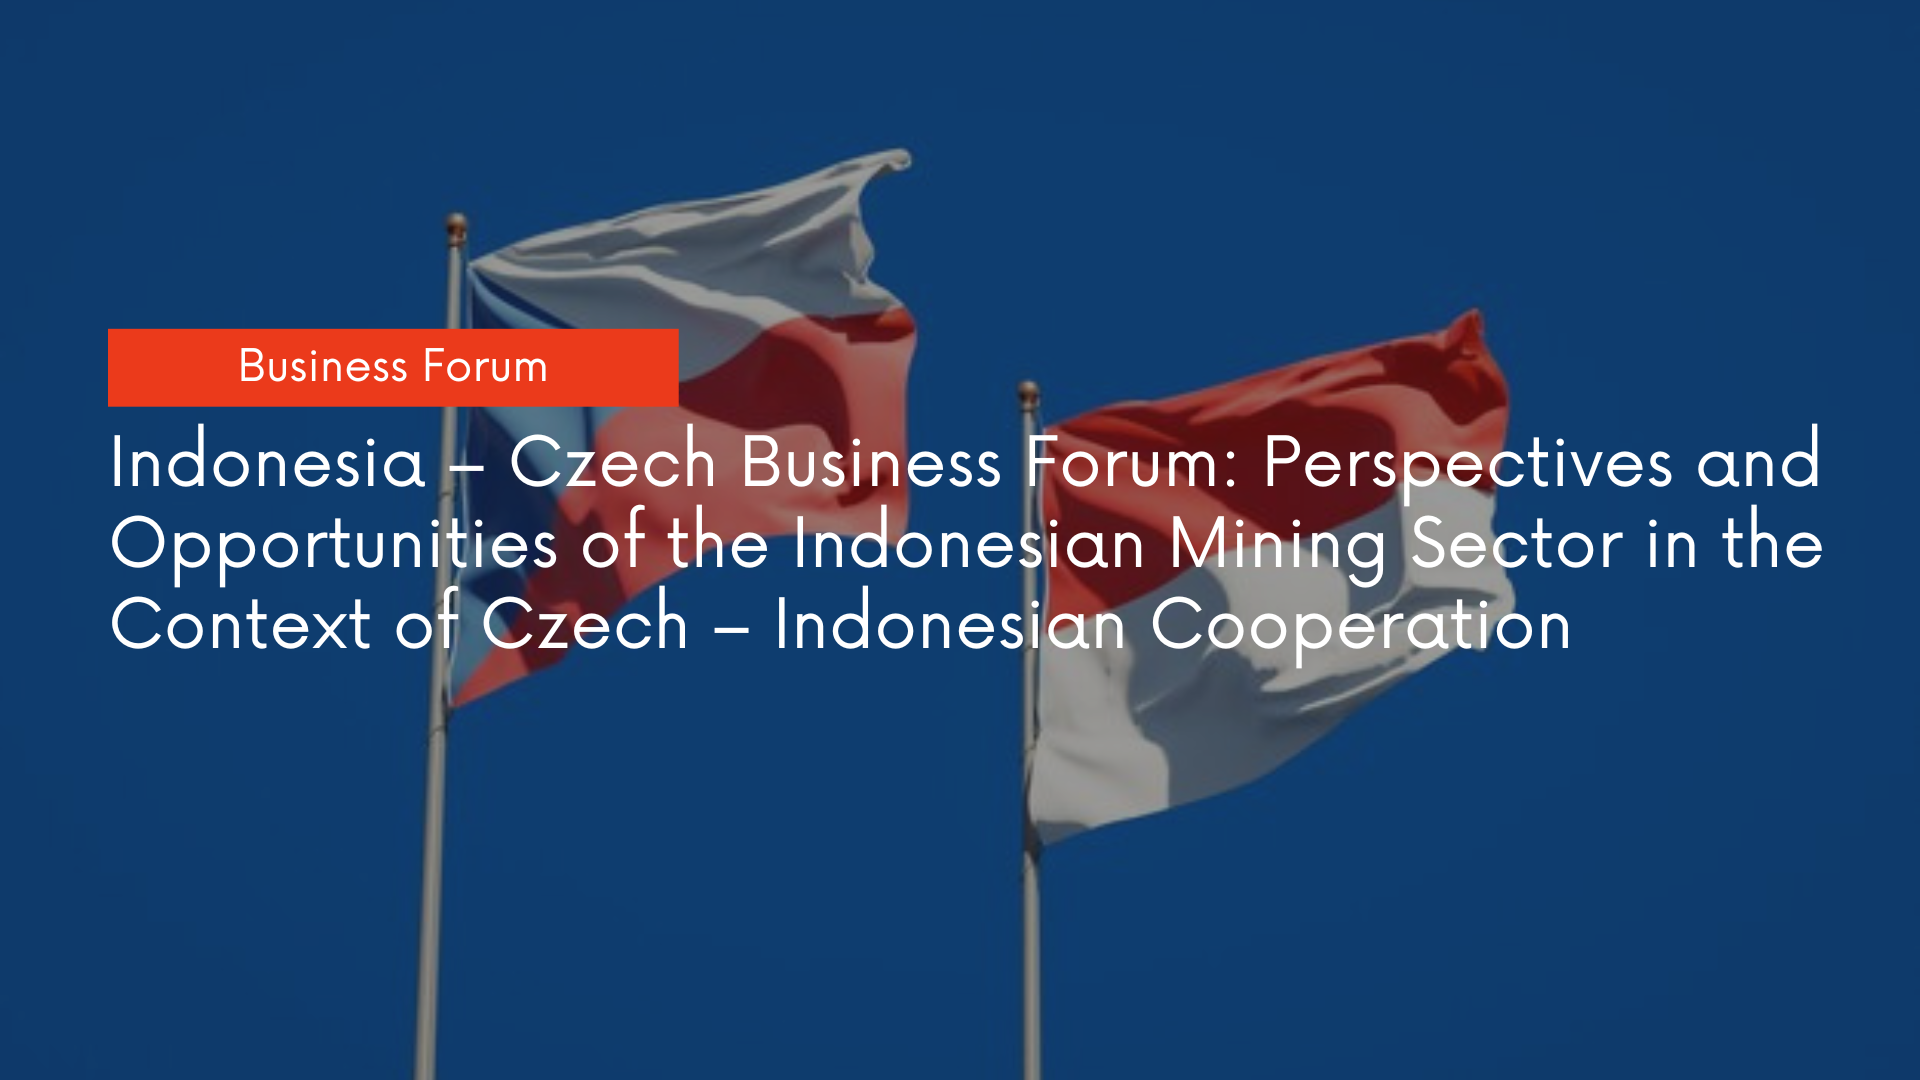 INDONESIA – CZECH BUSINESS FORUM